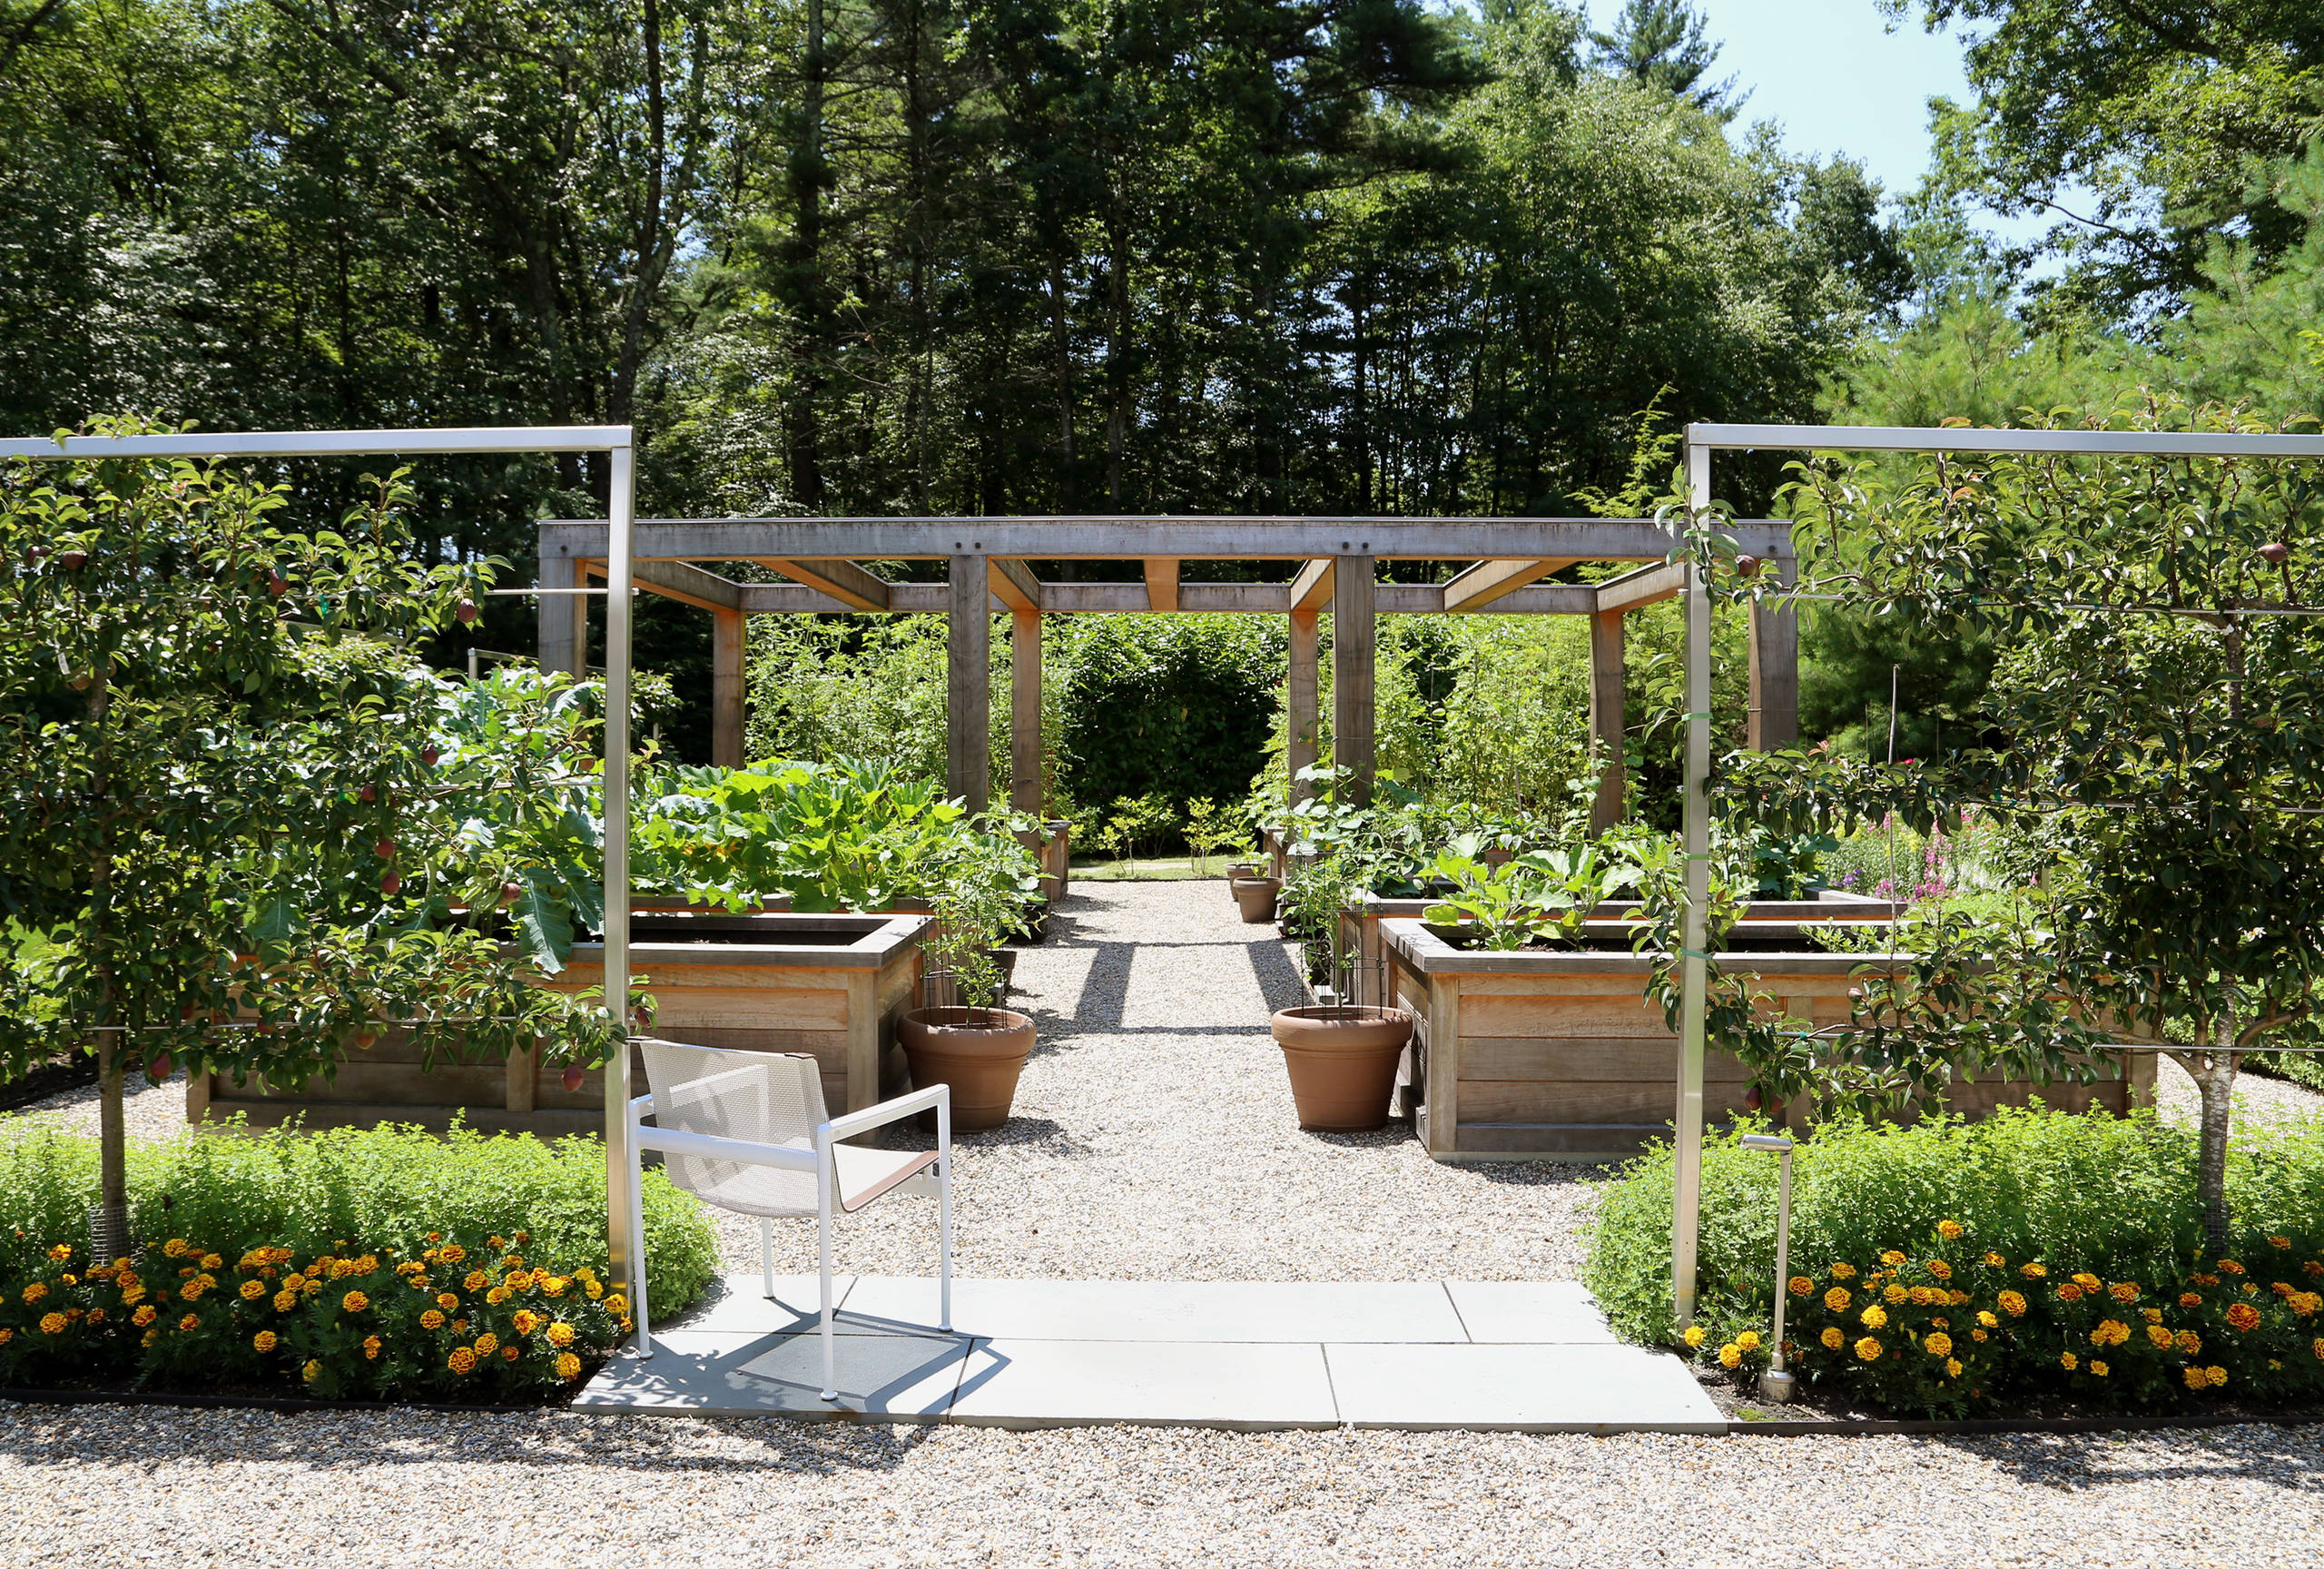 75 Beautiful Backyard Vegetable Garden Landscape Pictures Ideas January 2021 Houzz